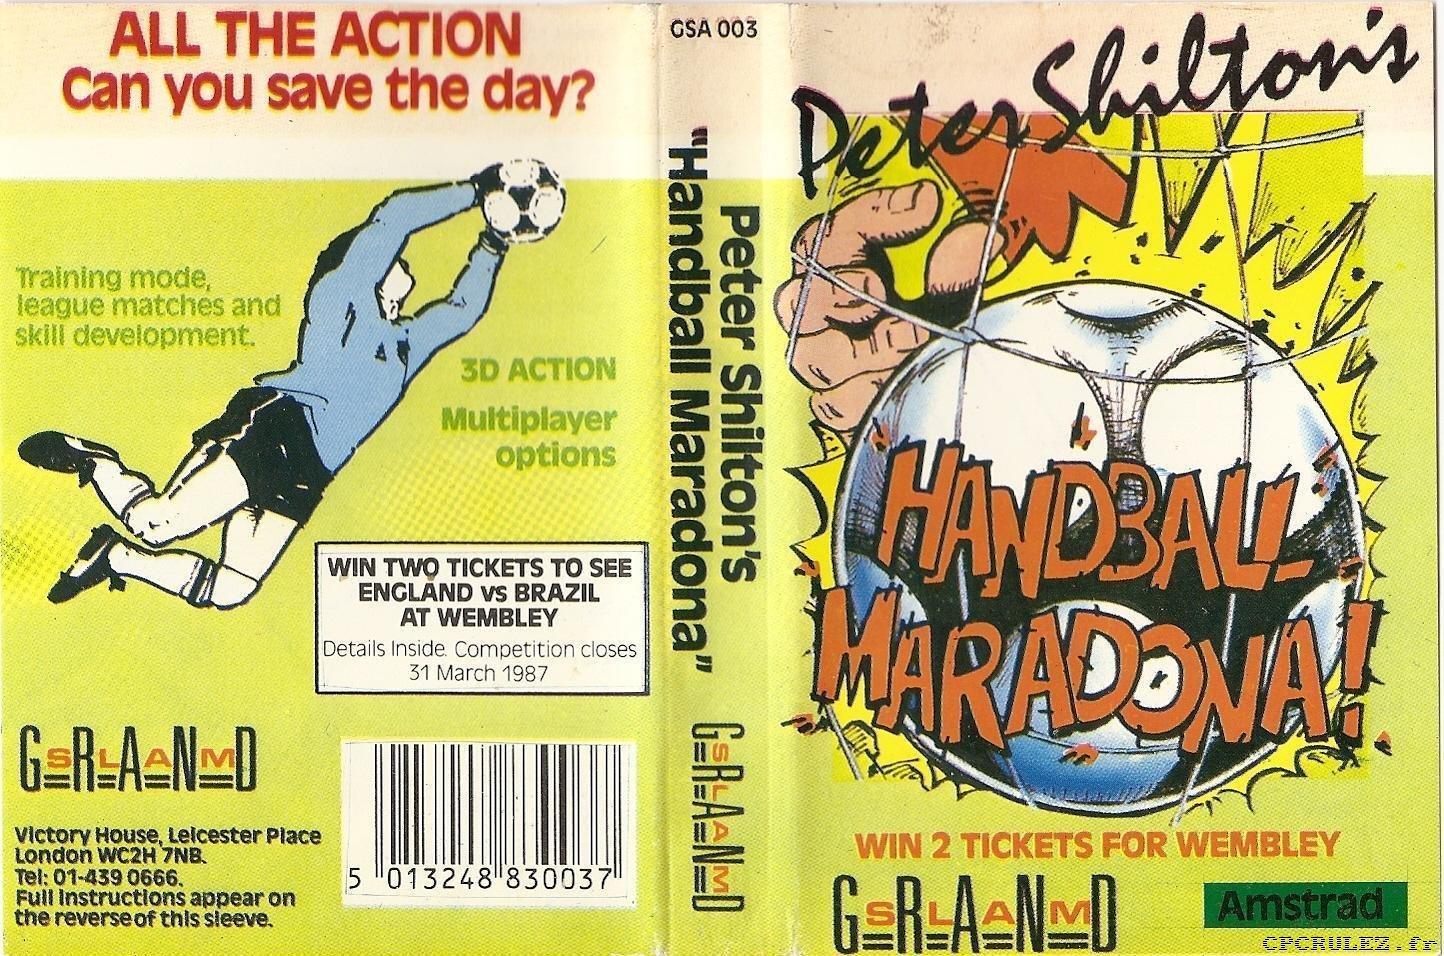 Peter Shiltons Handball Maradona